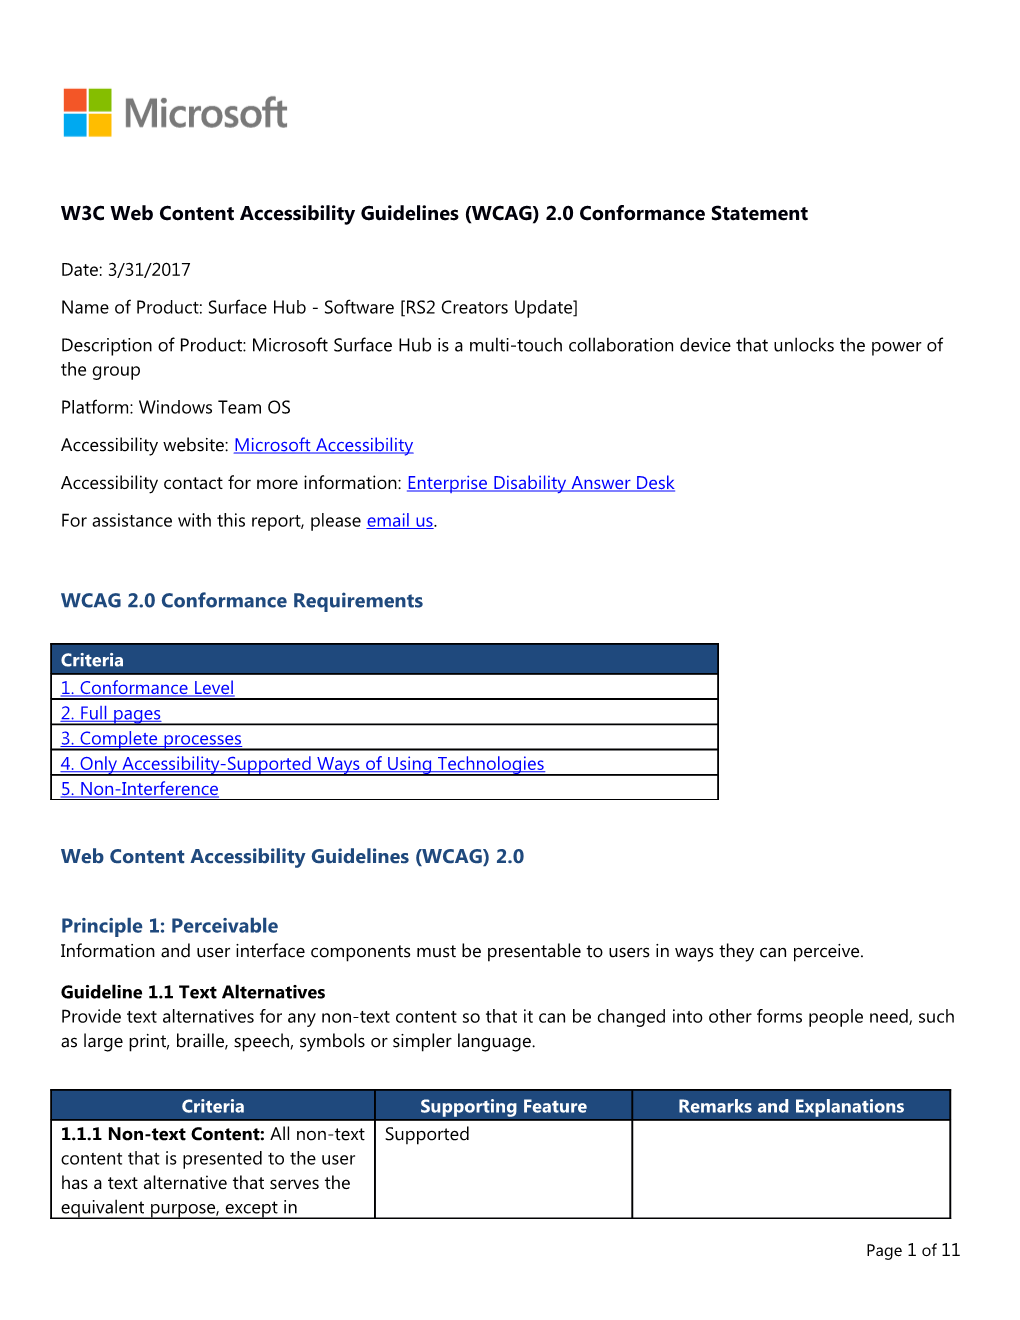 W3C Web Content Accessibility Guidelines (WCAG) 2.0 Conformance Statement s10